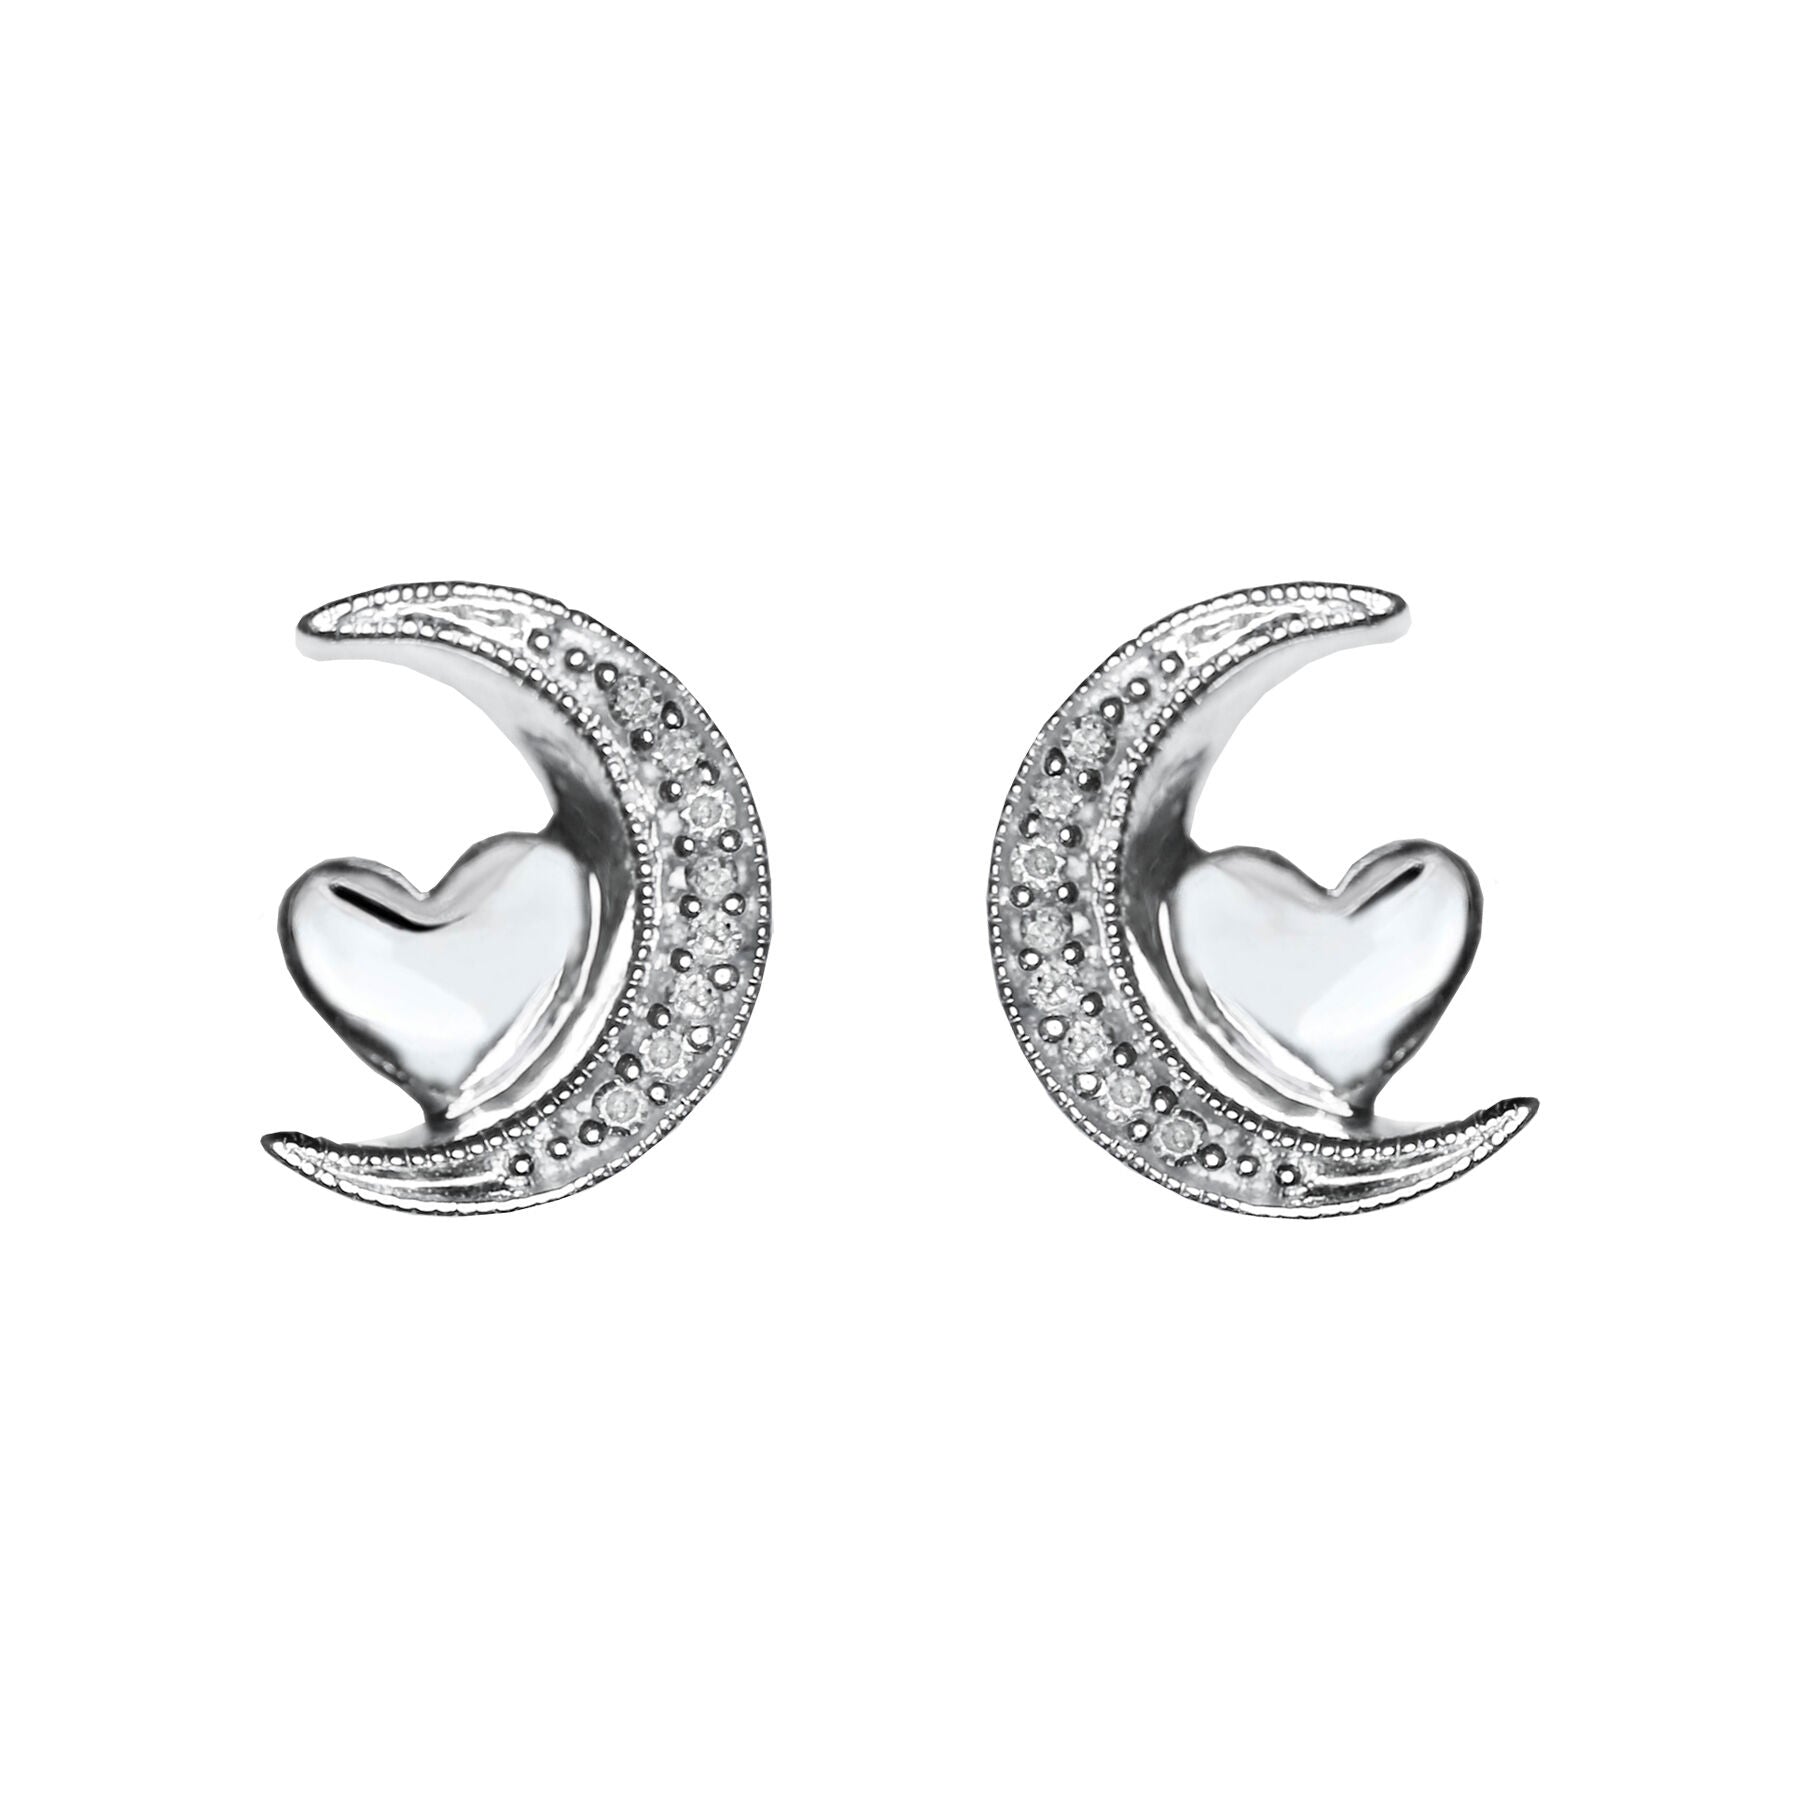 Silver Moon and Back Diamond Earrings